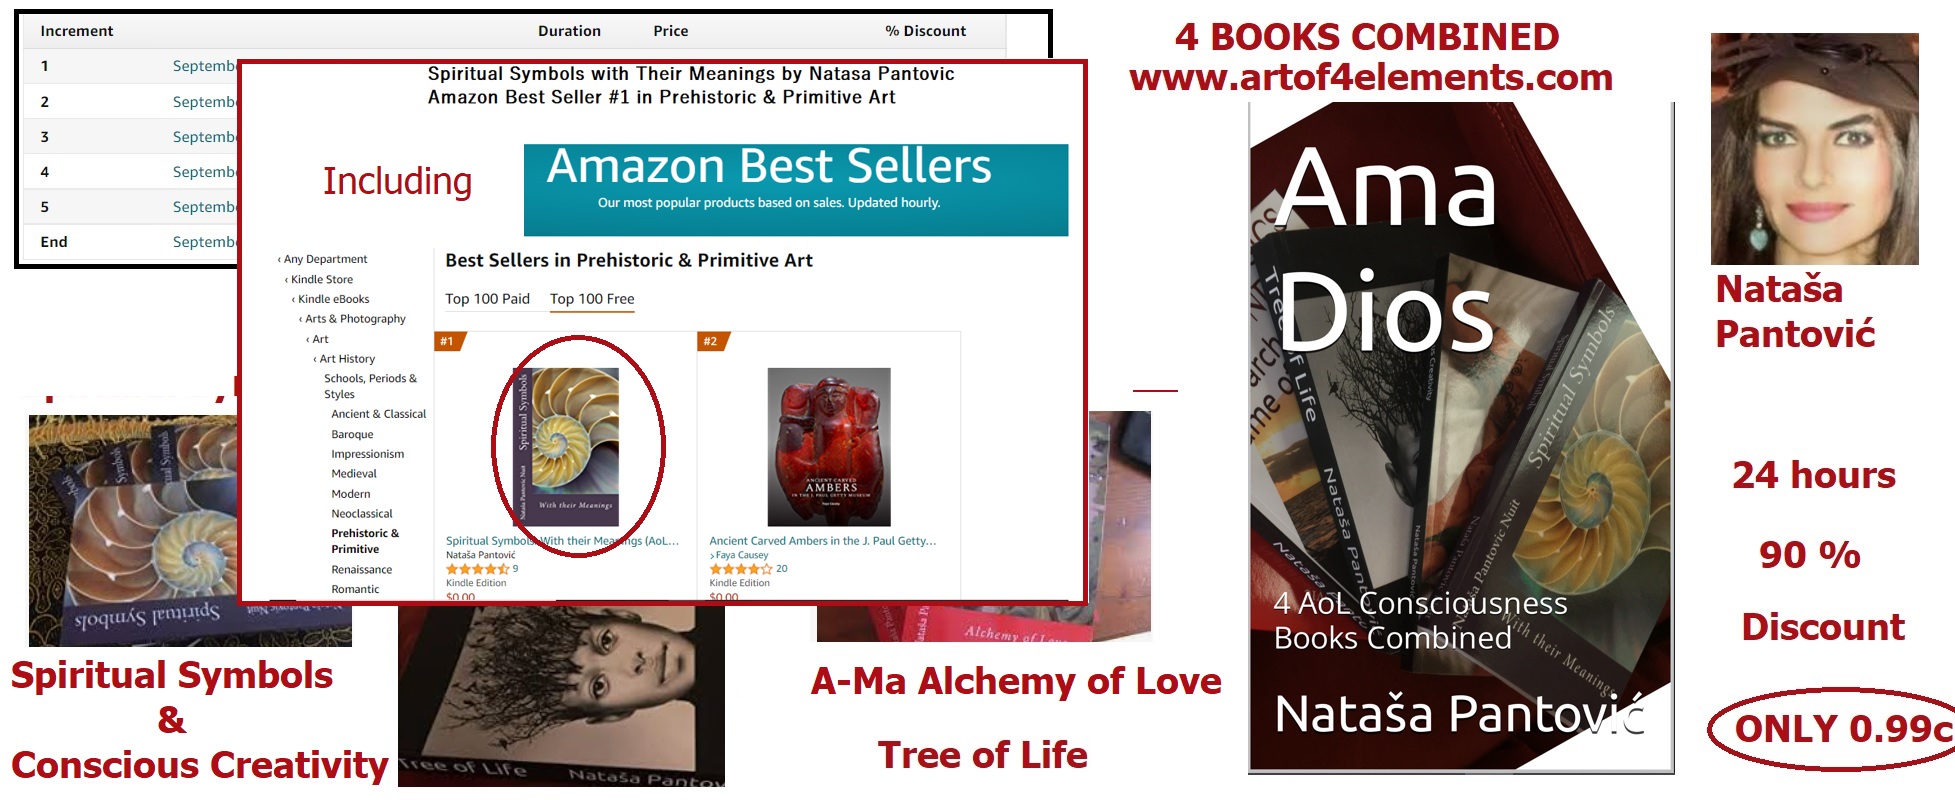 natasa-pantovic-ama-dios-4-aol-consciousness-books-combined-90-discount-including-amazon-best-sellers-spiritual-symbols-conscious-creativity